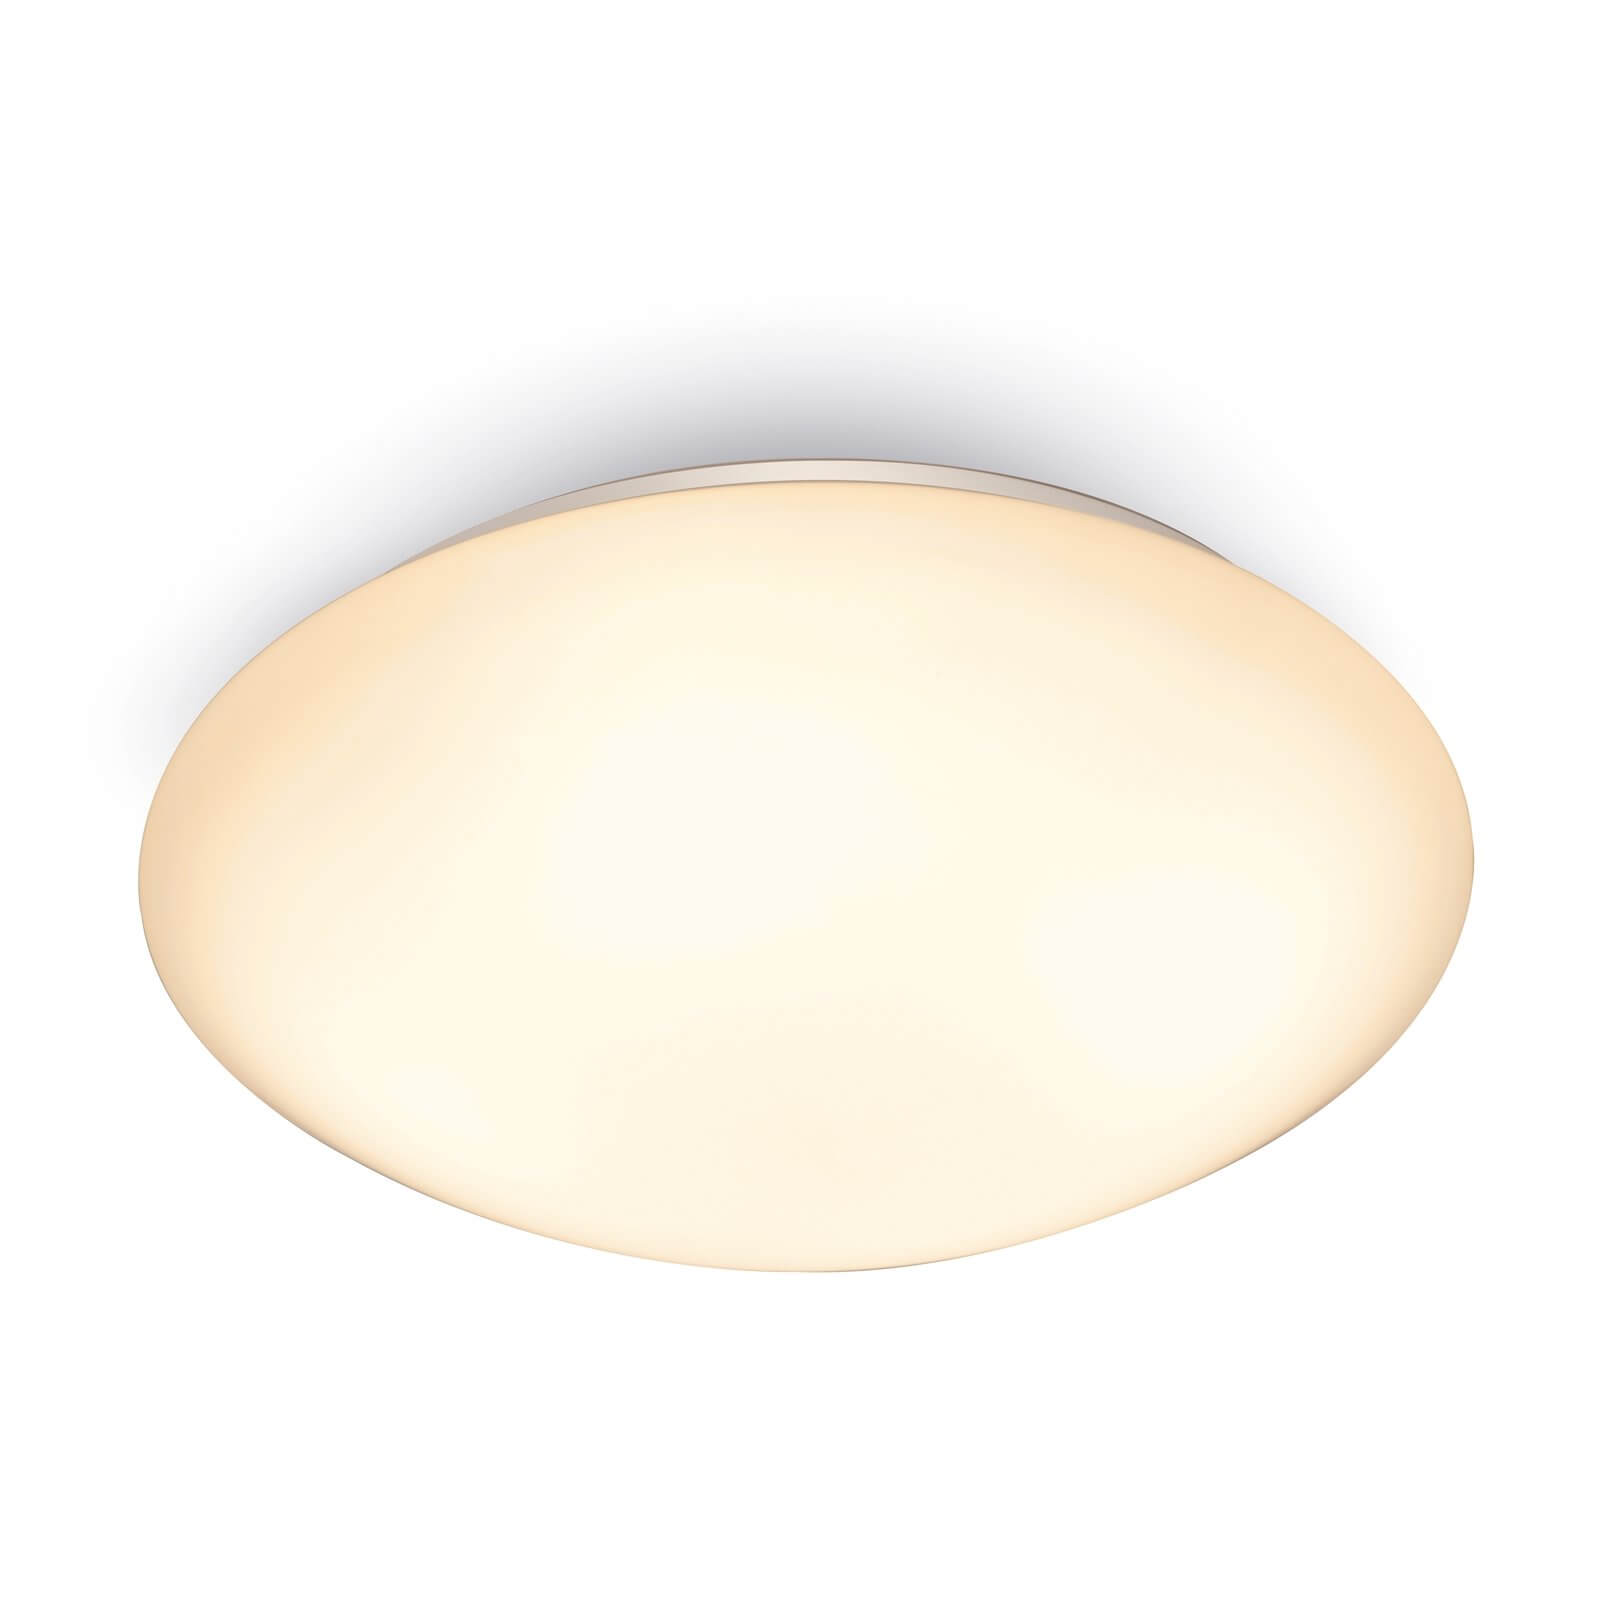 Dion 13W 25cm Flush Ceiling Light - Warm White